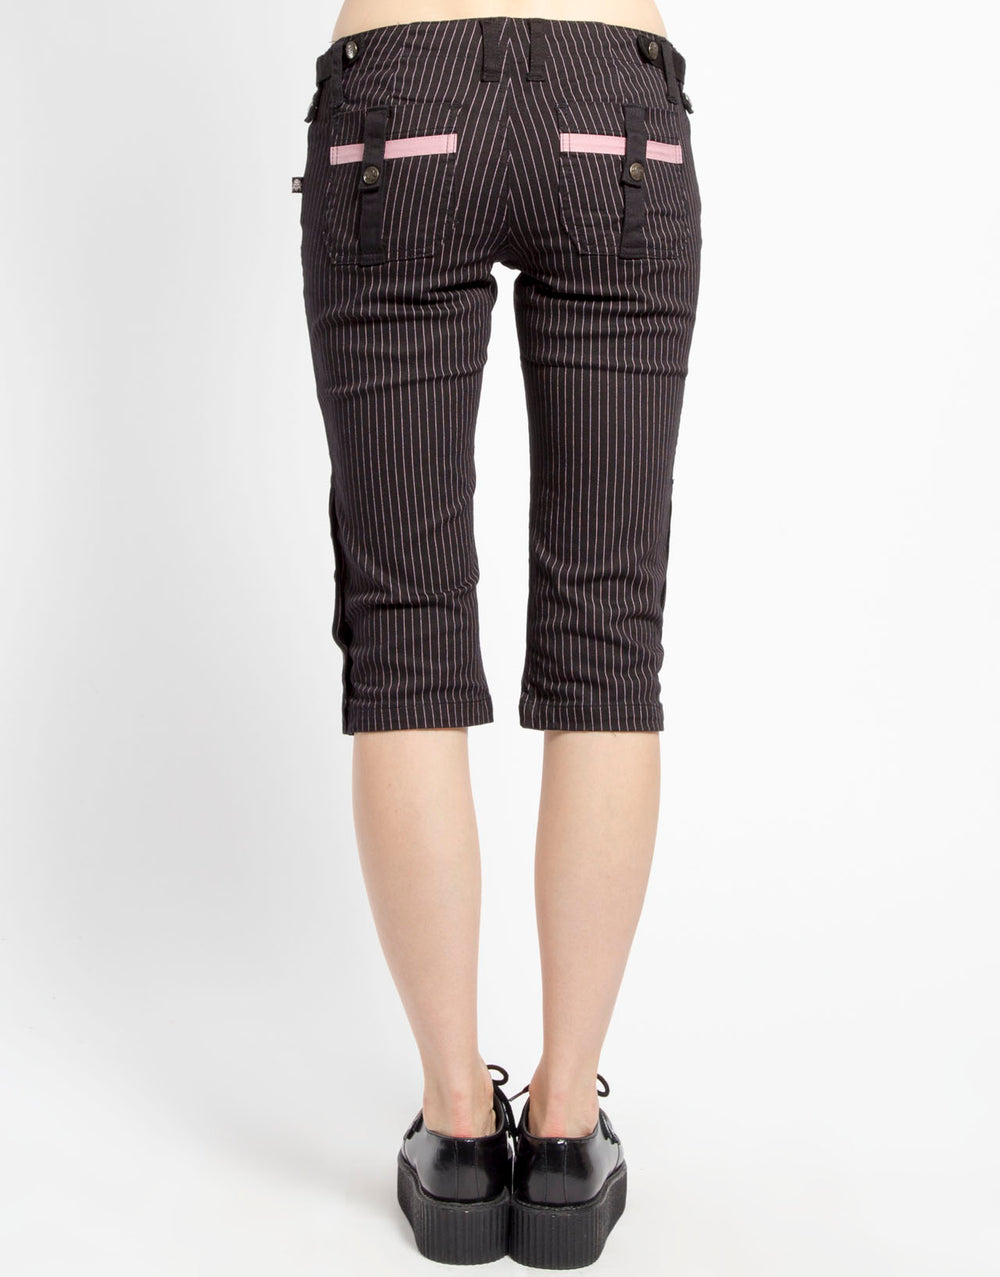 The Manhattan Pinstripe Pants